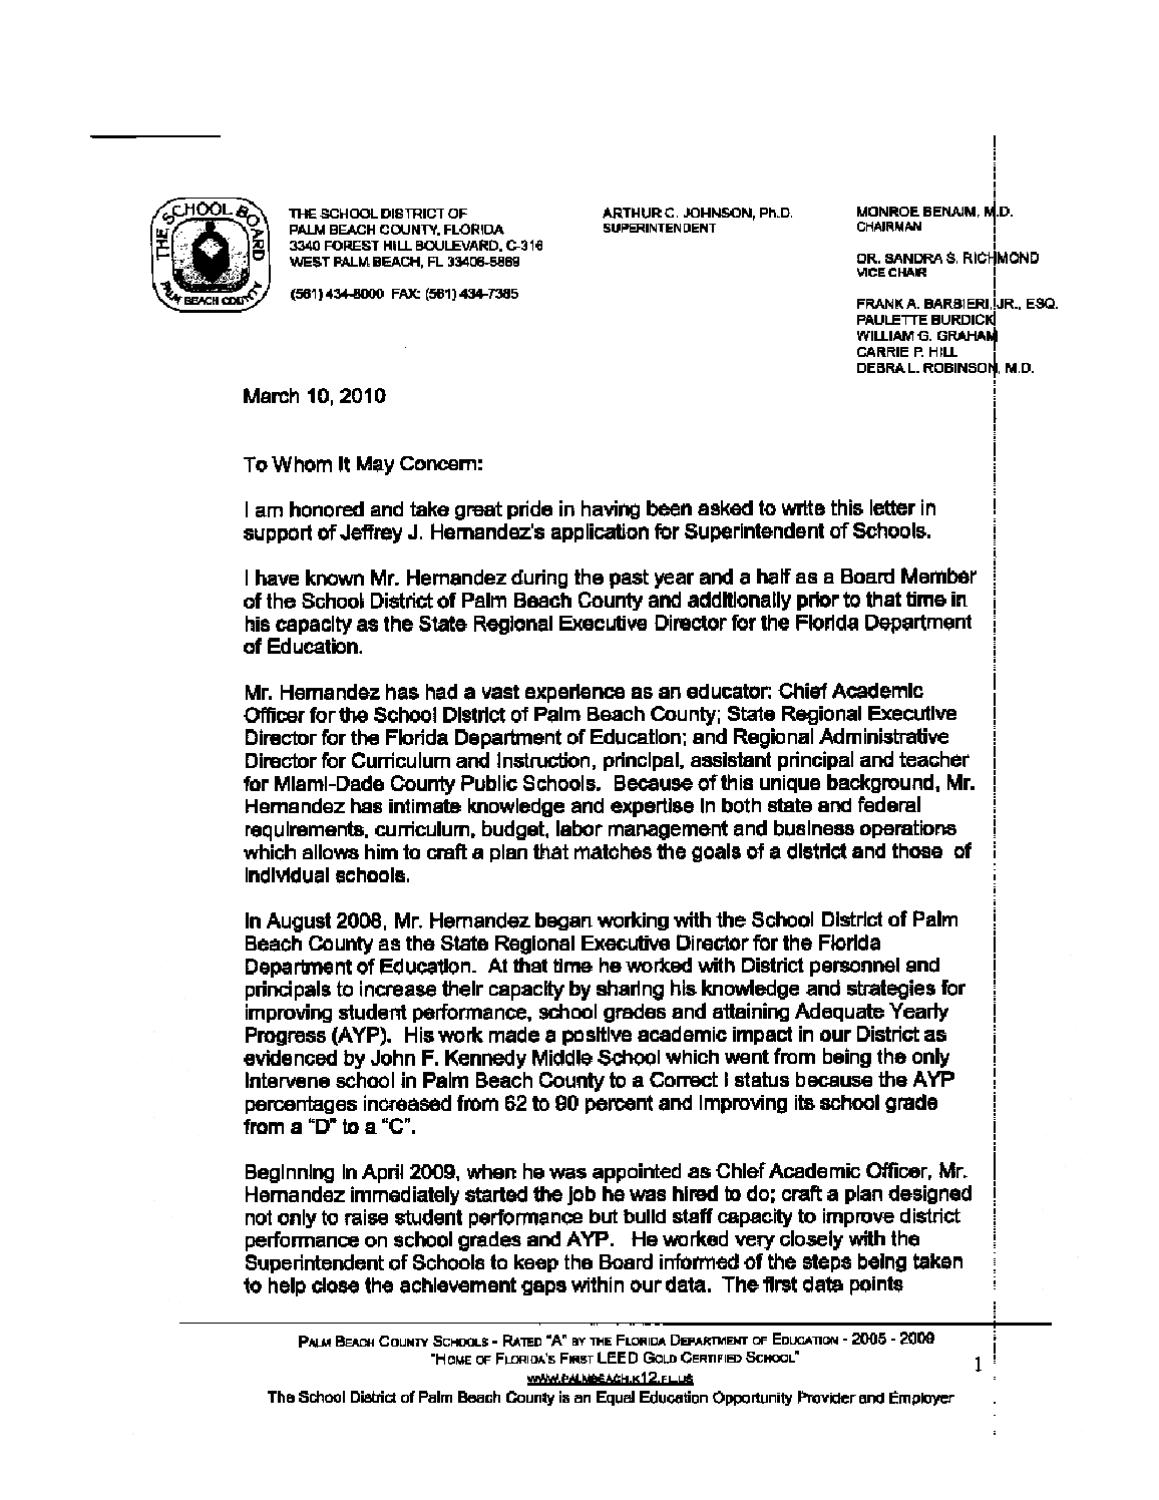 Benaims Recommendation Letter For Hernandez Debbie Block within dimensions 1159 X 1500